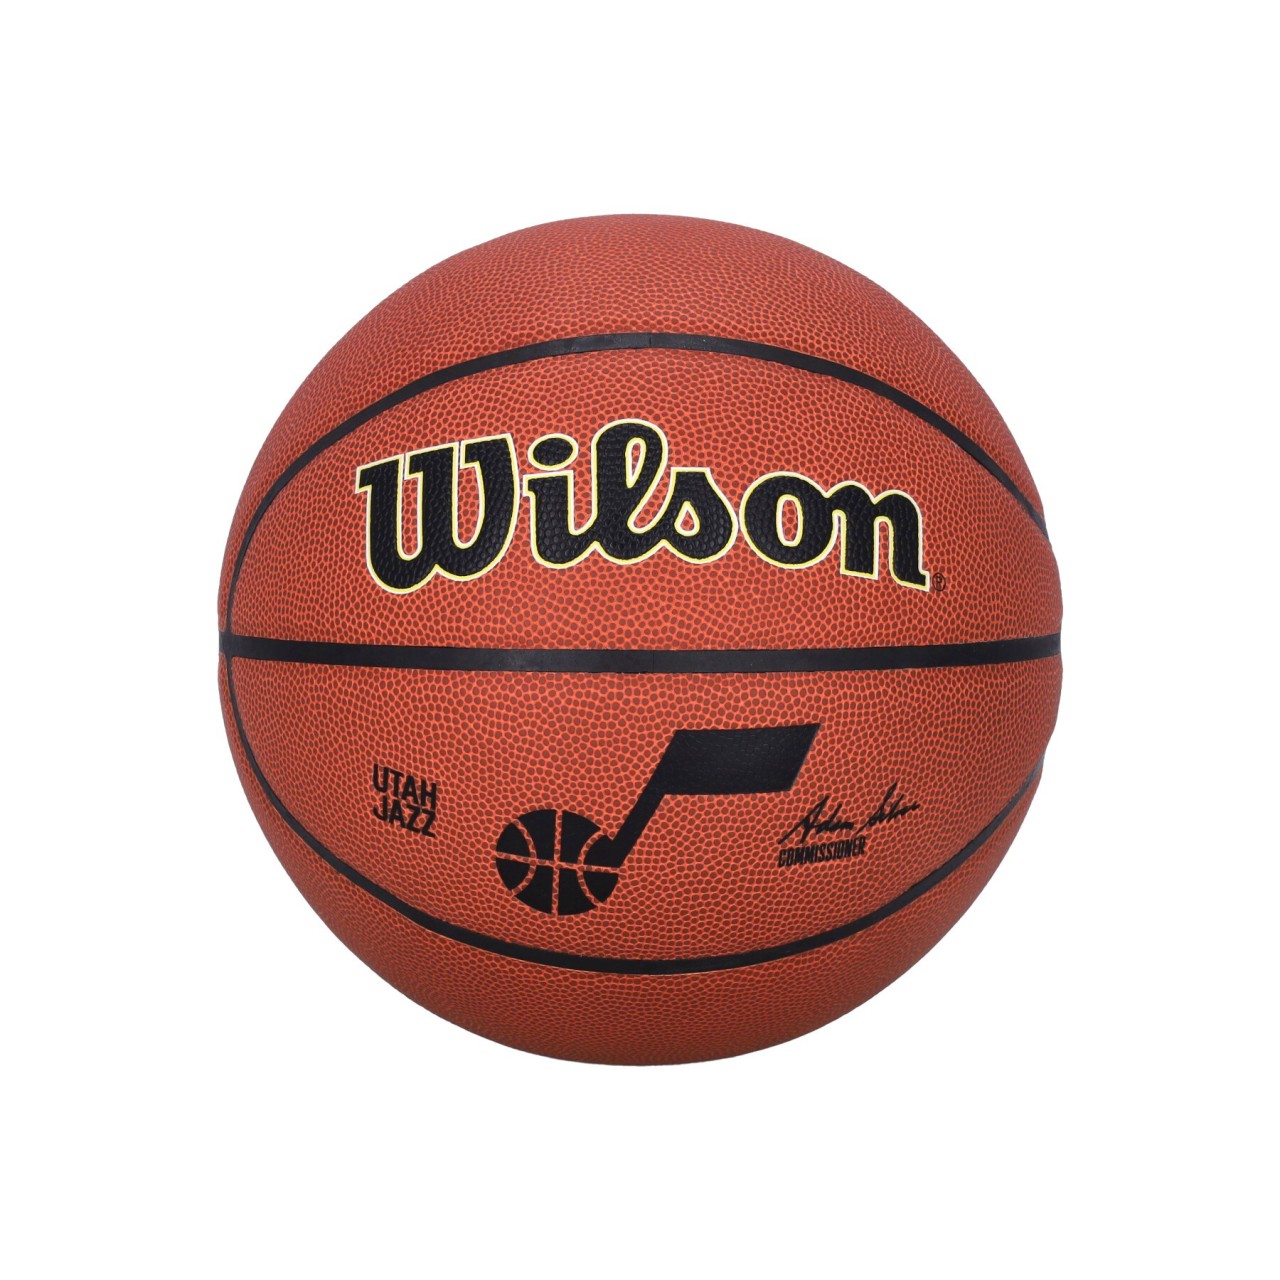 WILSON TEAM NBA TEAM ALLIANCE BASKETBALL SIZE 7 UTAJAZ WZ4011902XB7